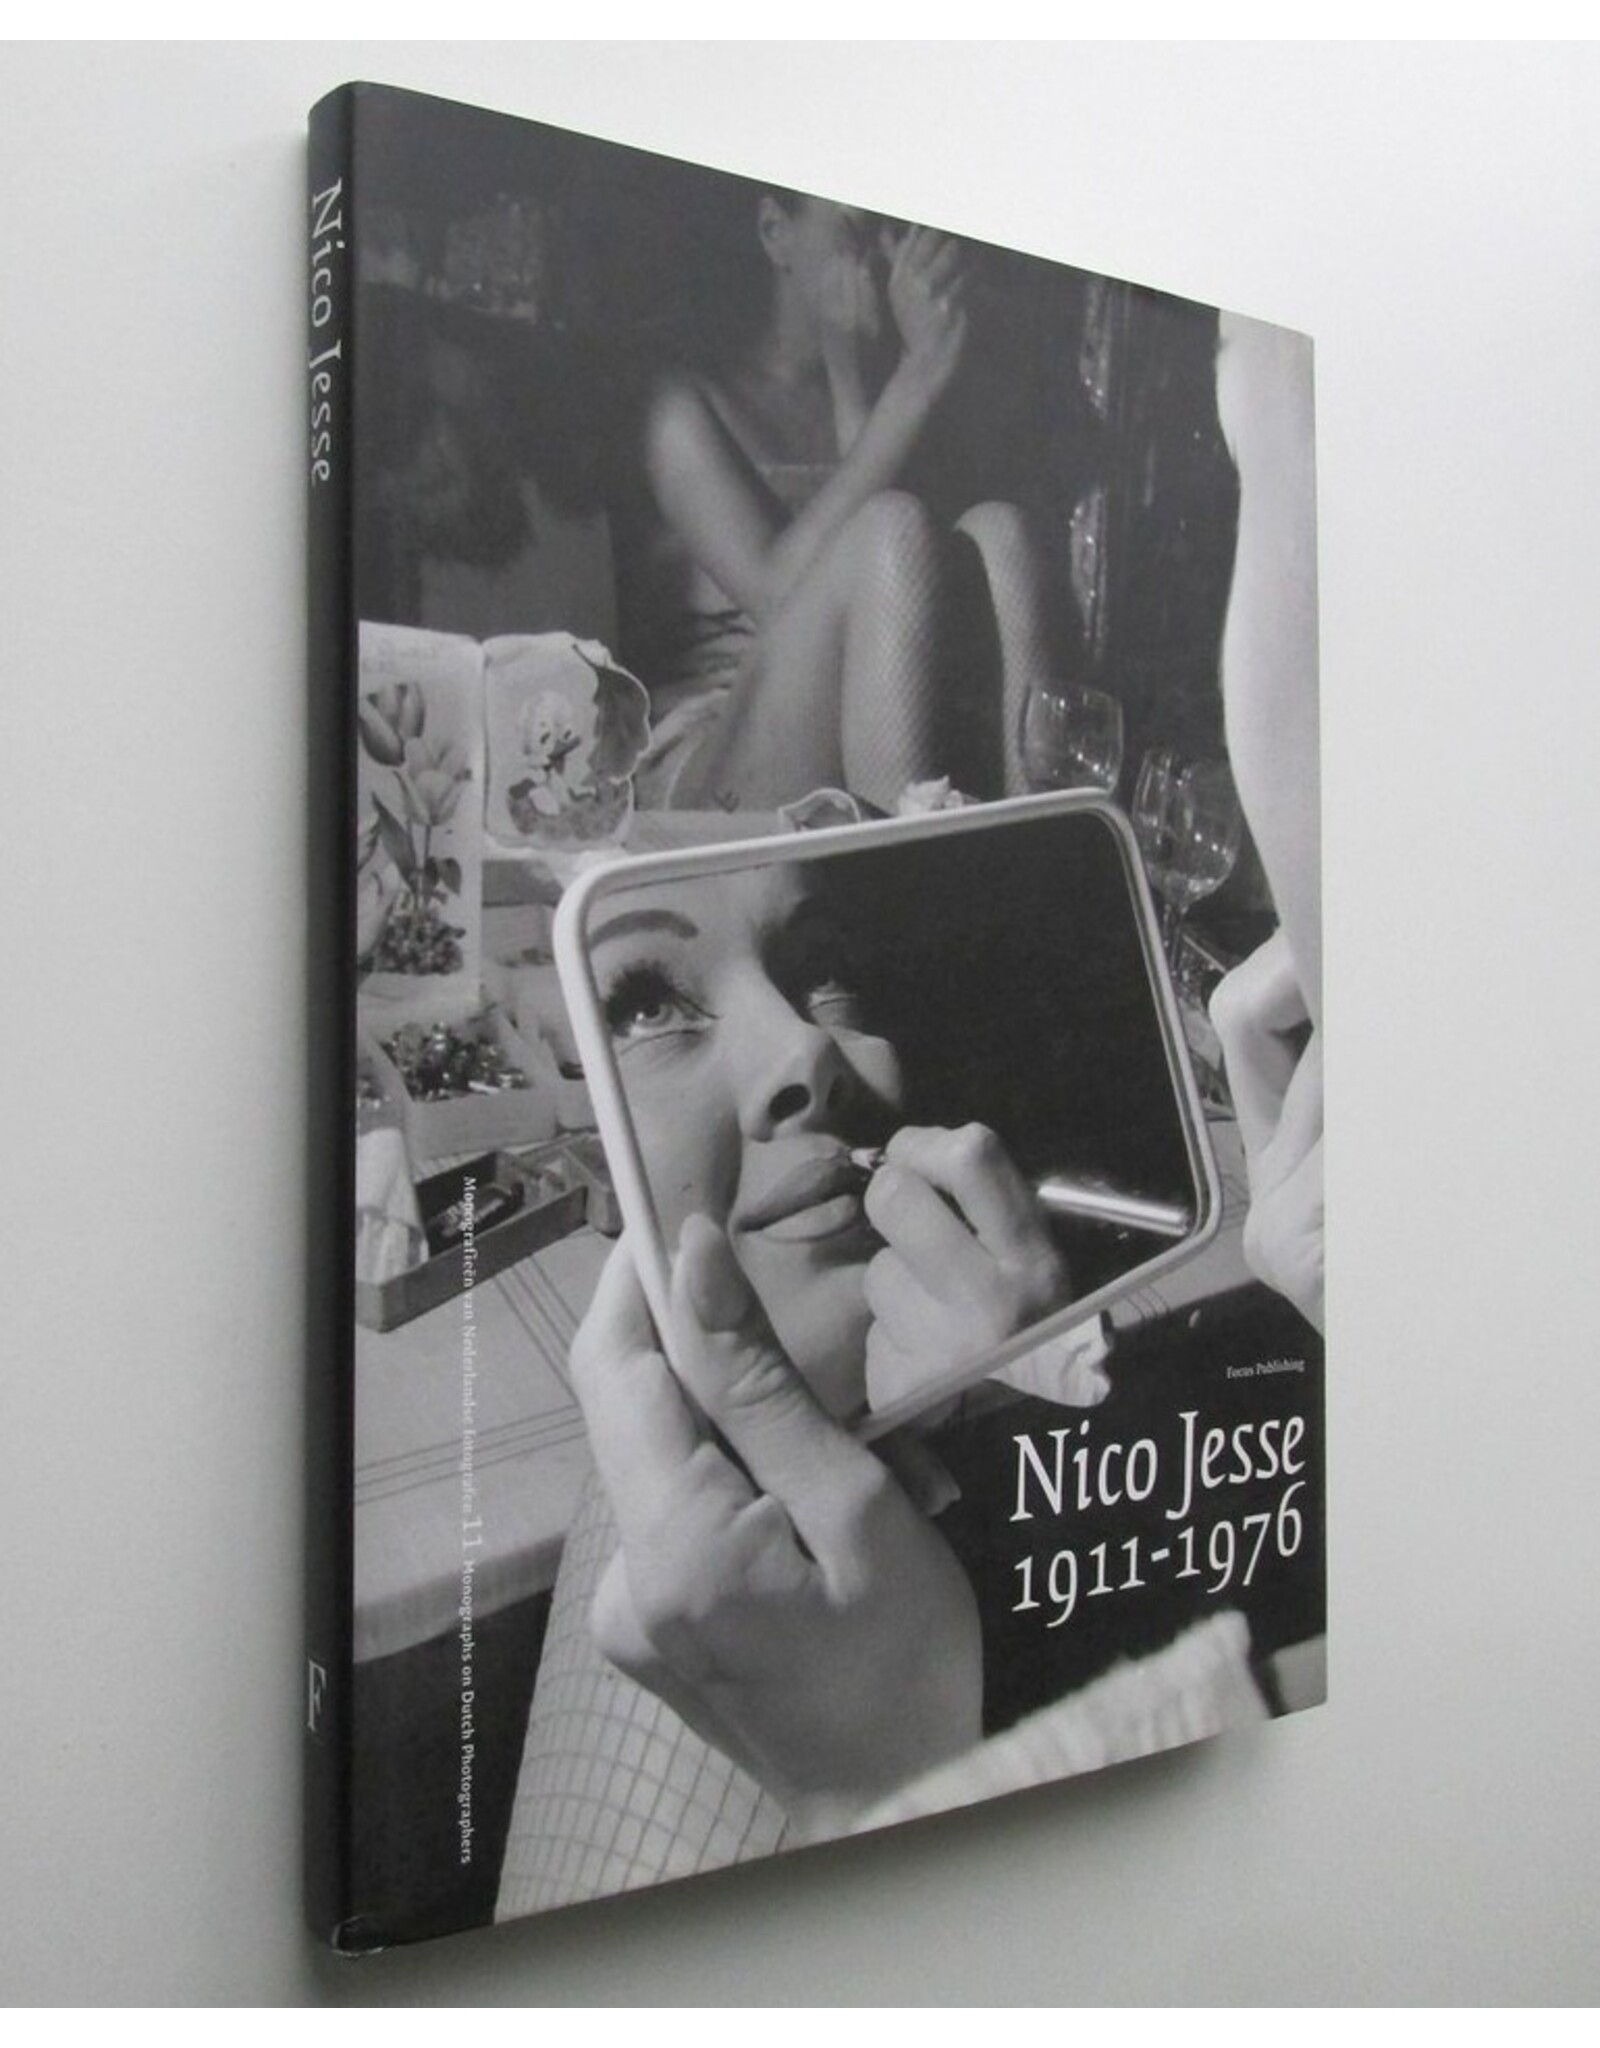 Flip Bool & Sandra Felten - Nico Jesse [1911-1976]